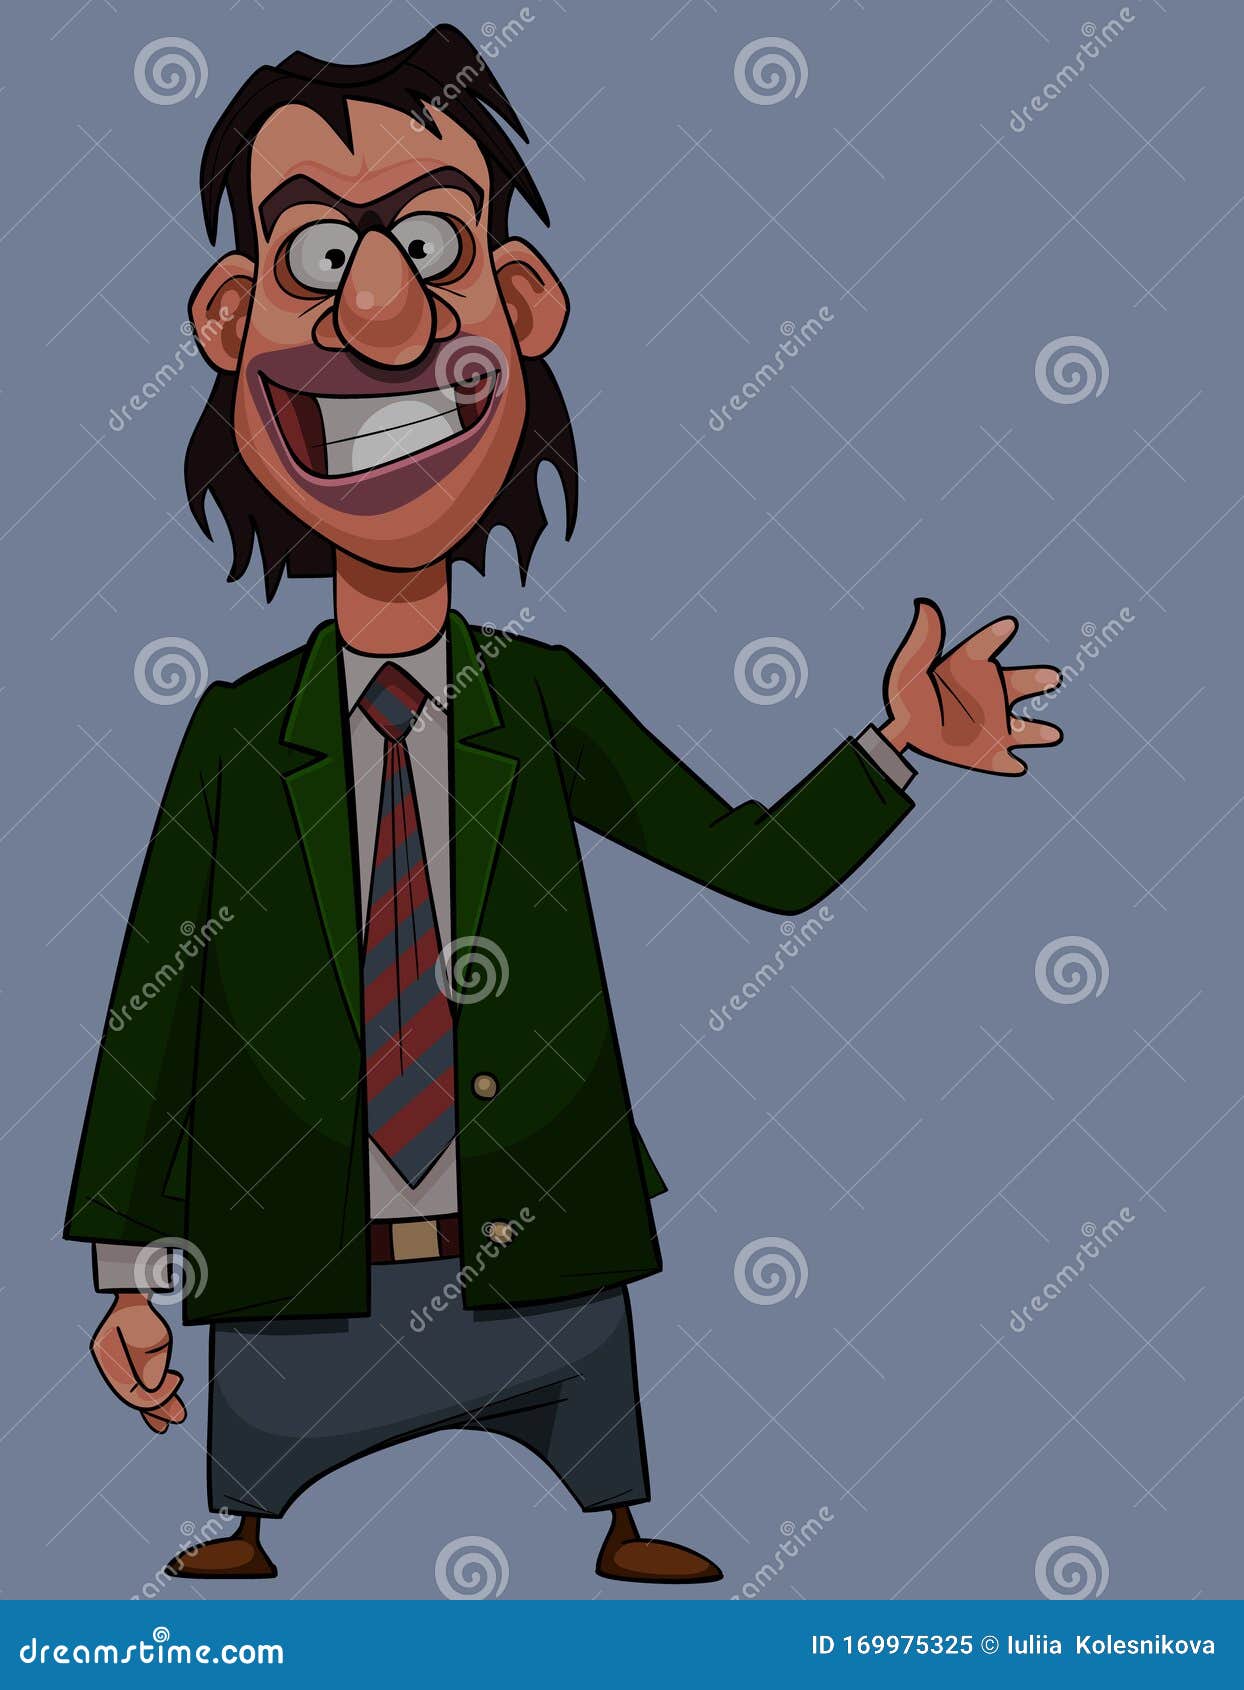 Cartoon Smiling Man in Suit Joyfully Waves His Hand Stock Vector -  Illustration of cartoon, suit: 169975325